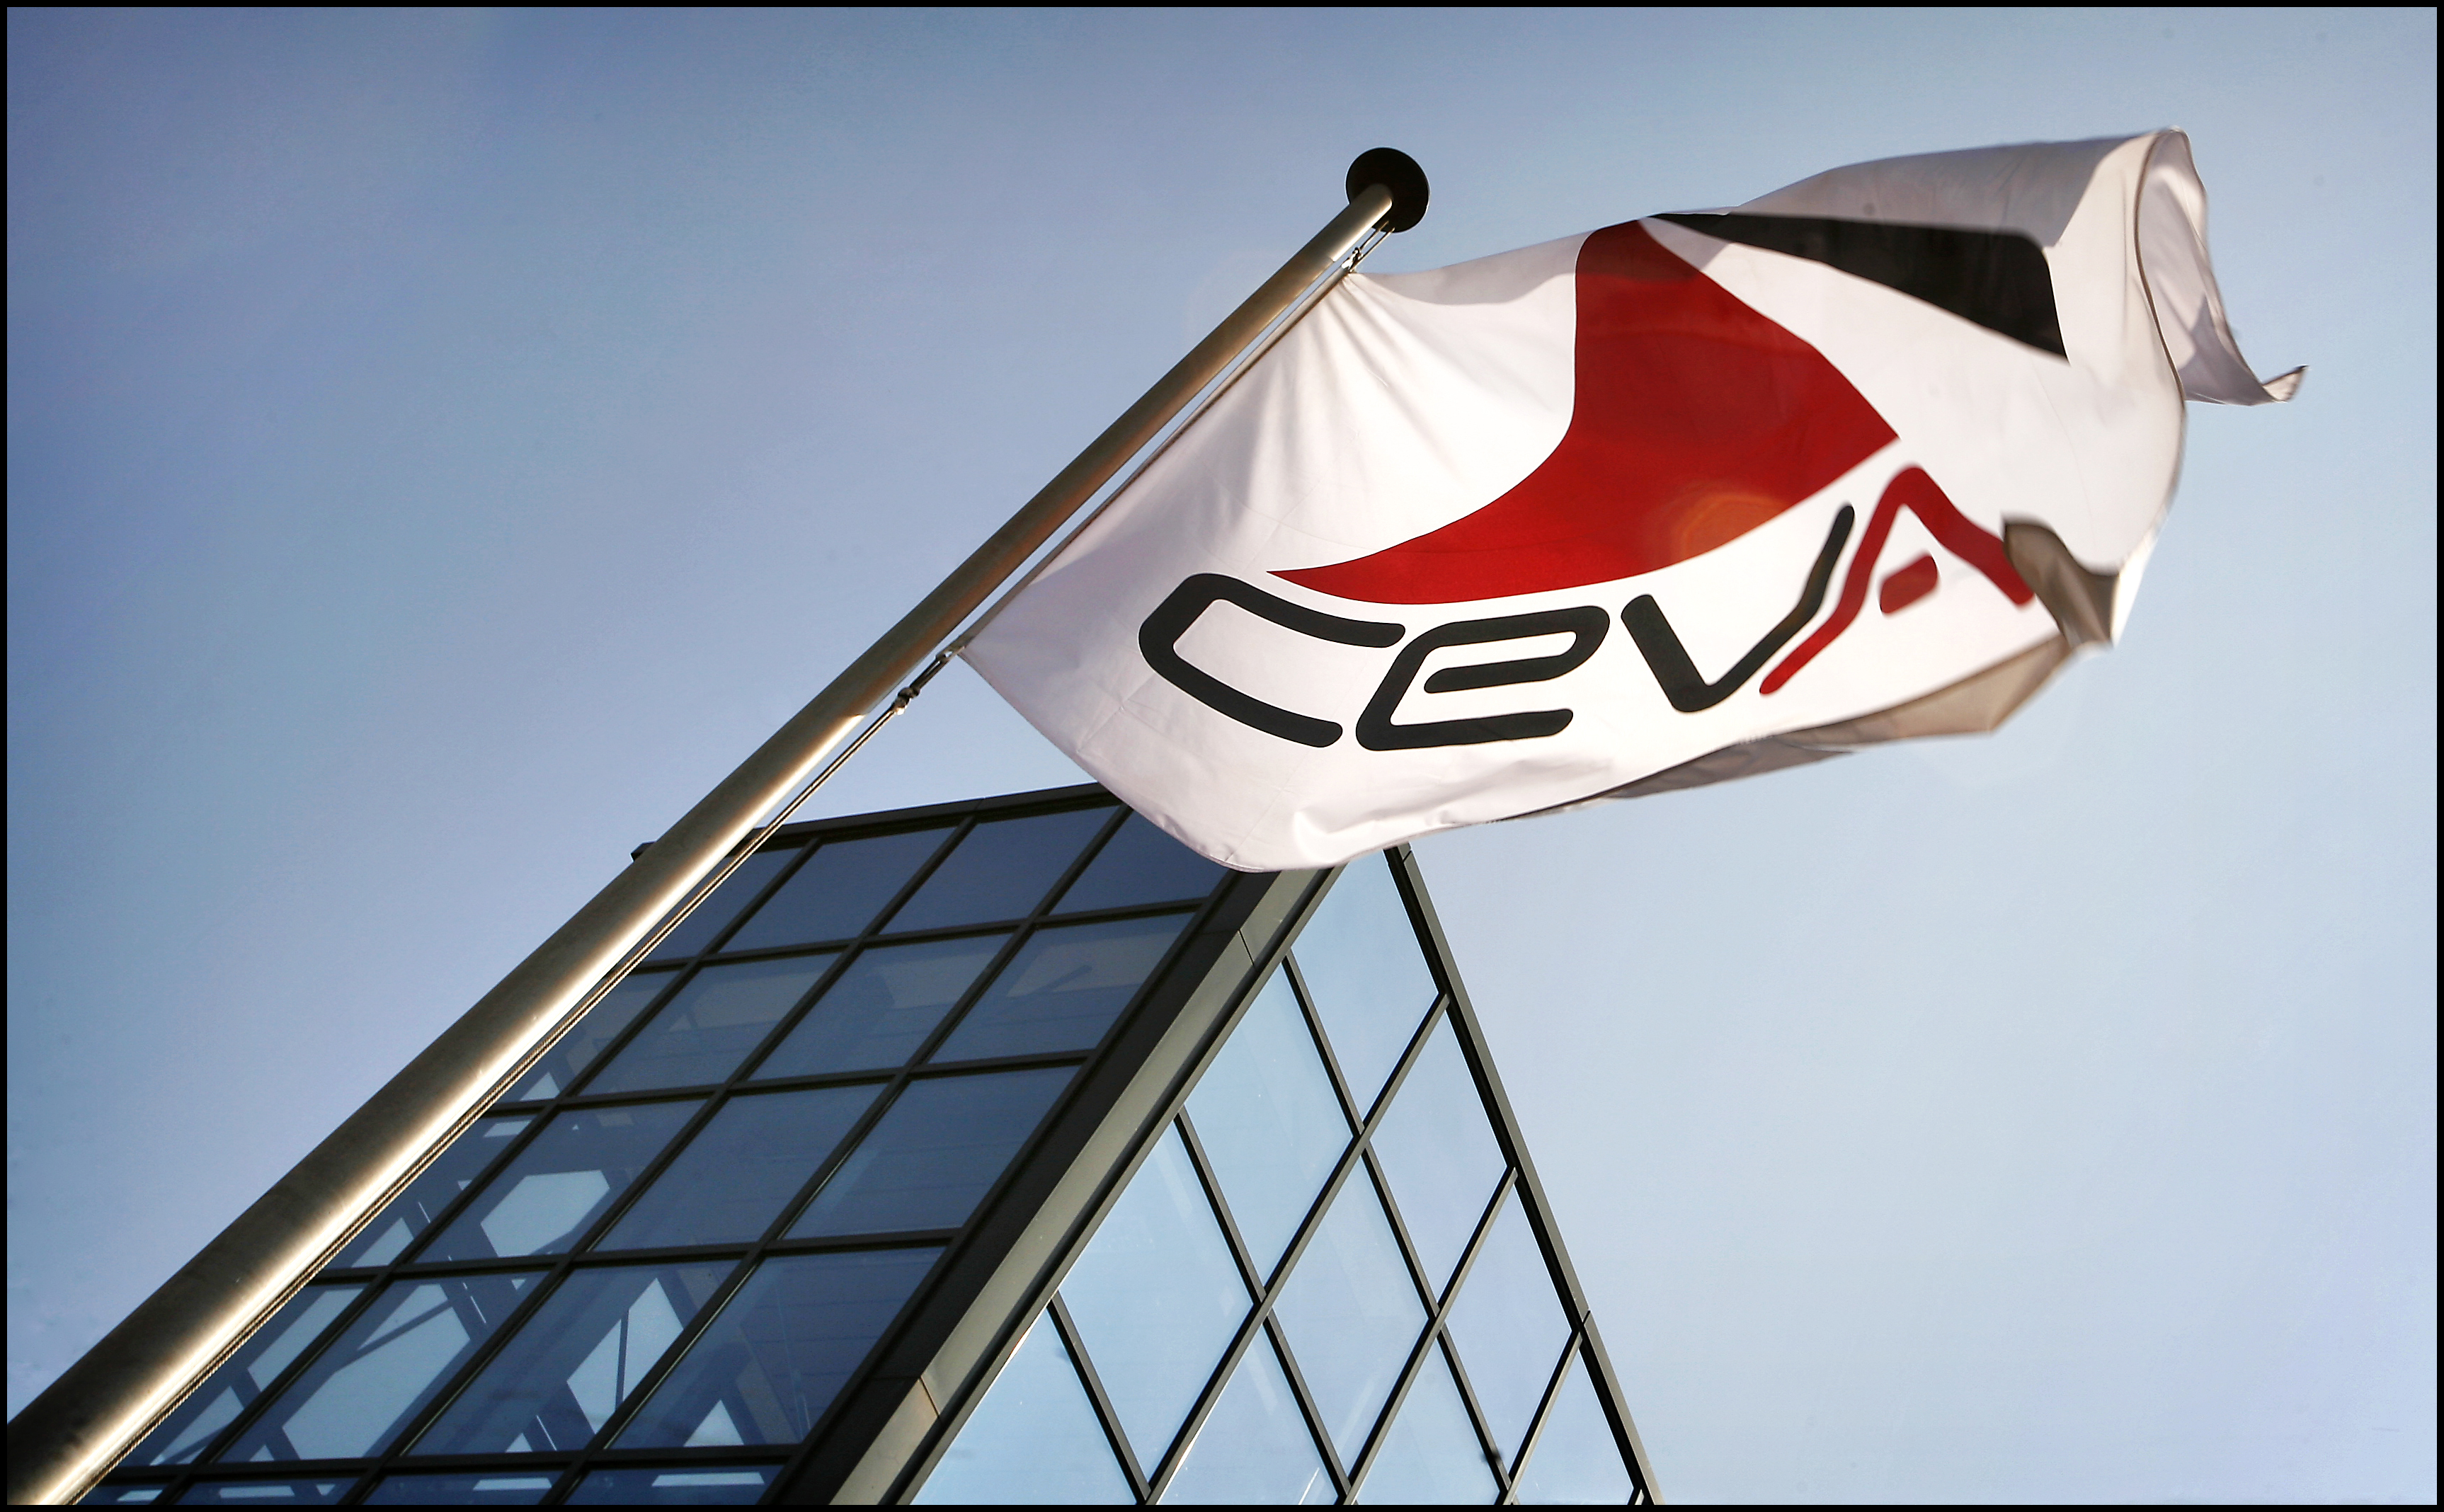 New step in CMA CGM and Ceva Logistics’ strategic partnership